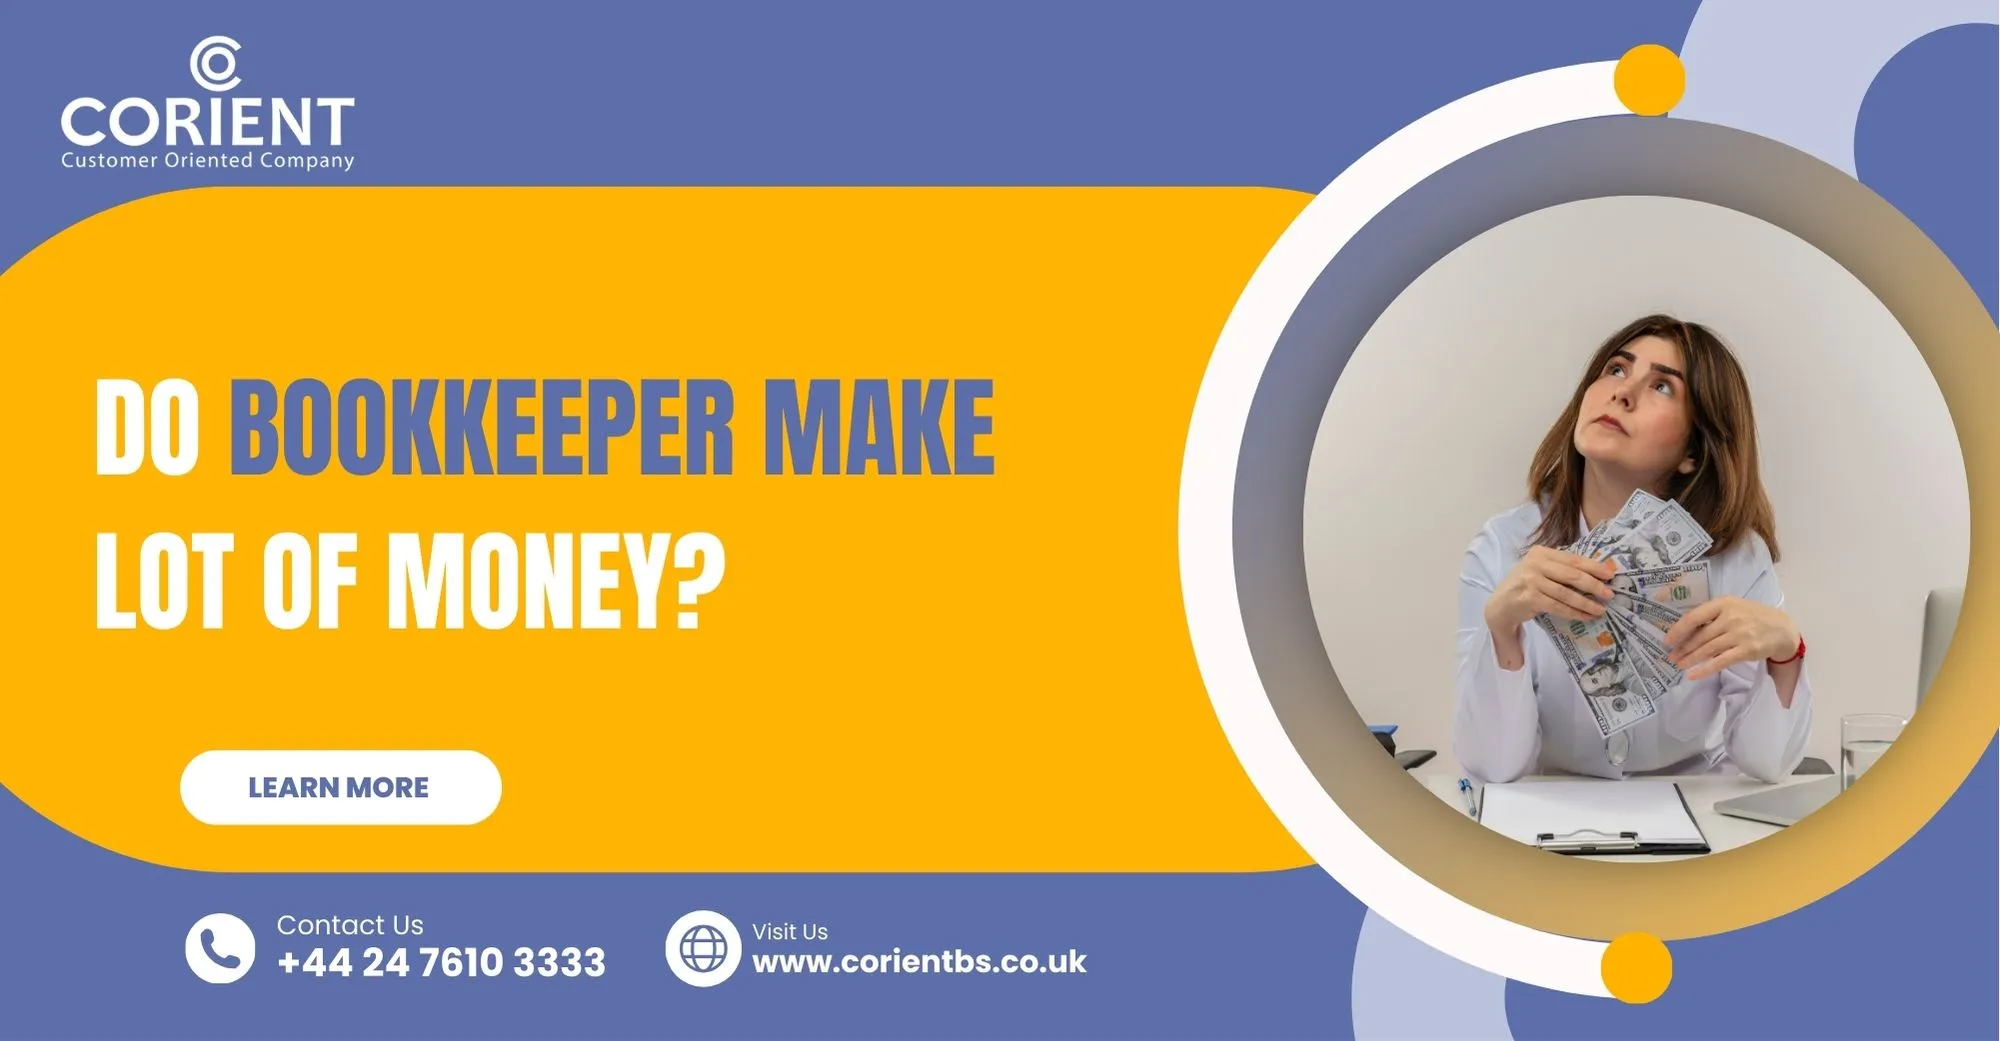 Do Bookkeeper Make Lot of Money?